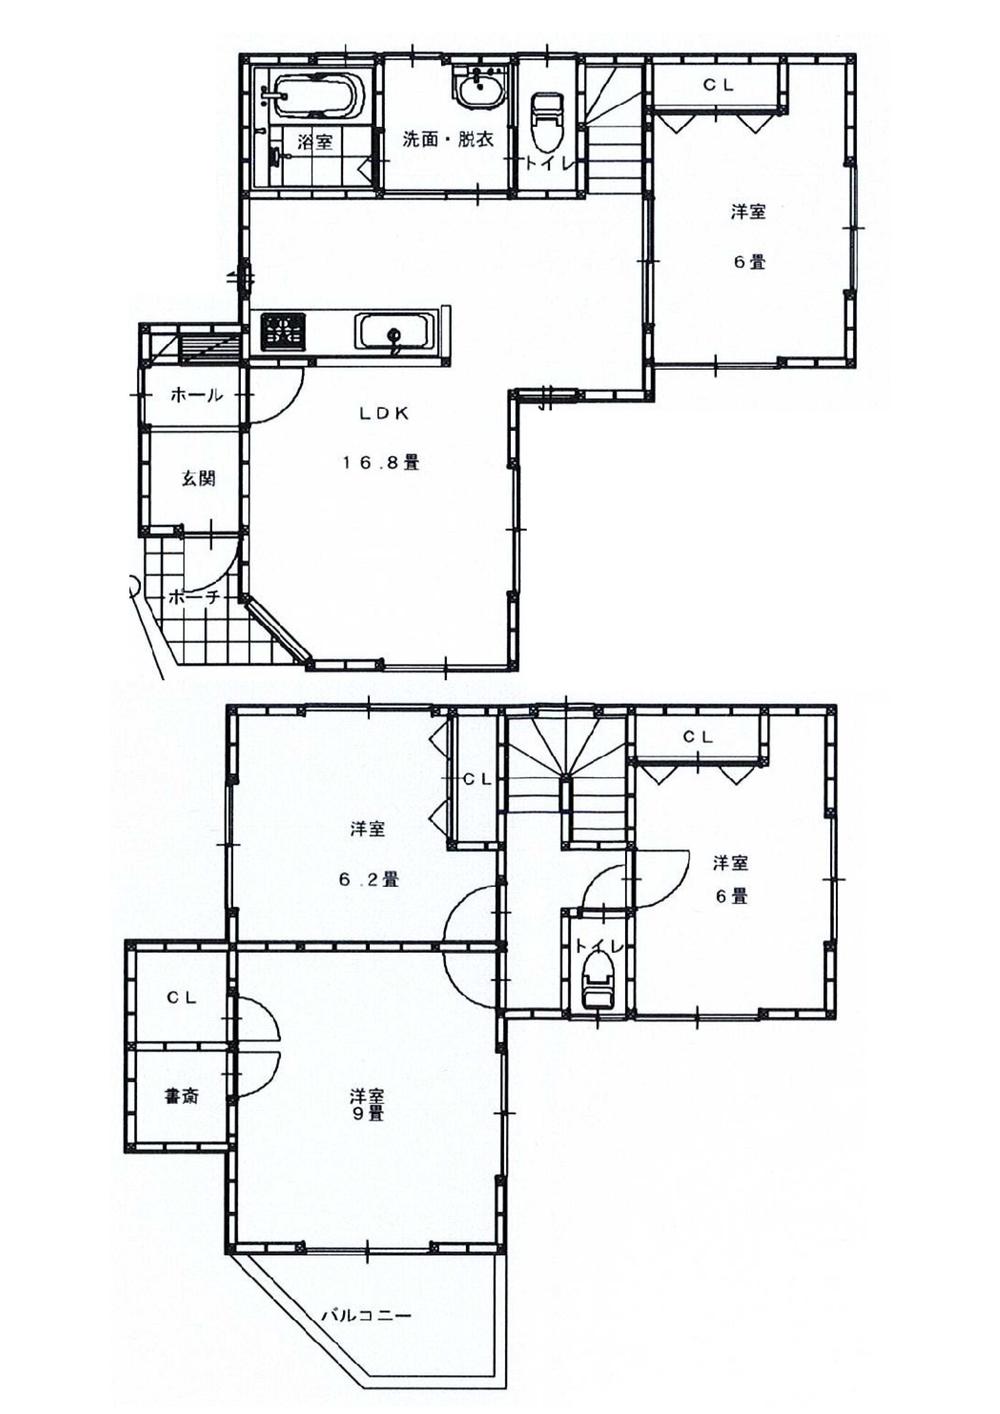 Building plan example (floor plan). Building plan example (4 Building) 4LDK, Land price 20.8 million yen, Land area 105.84 sq m , Building price 15 million yen, Building area 101.43 sq m